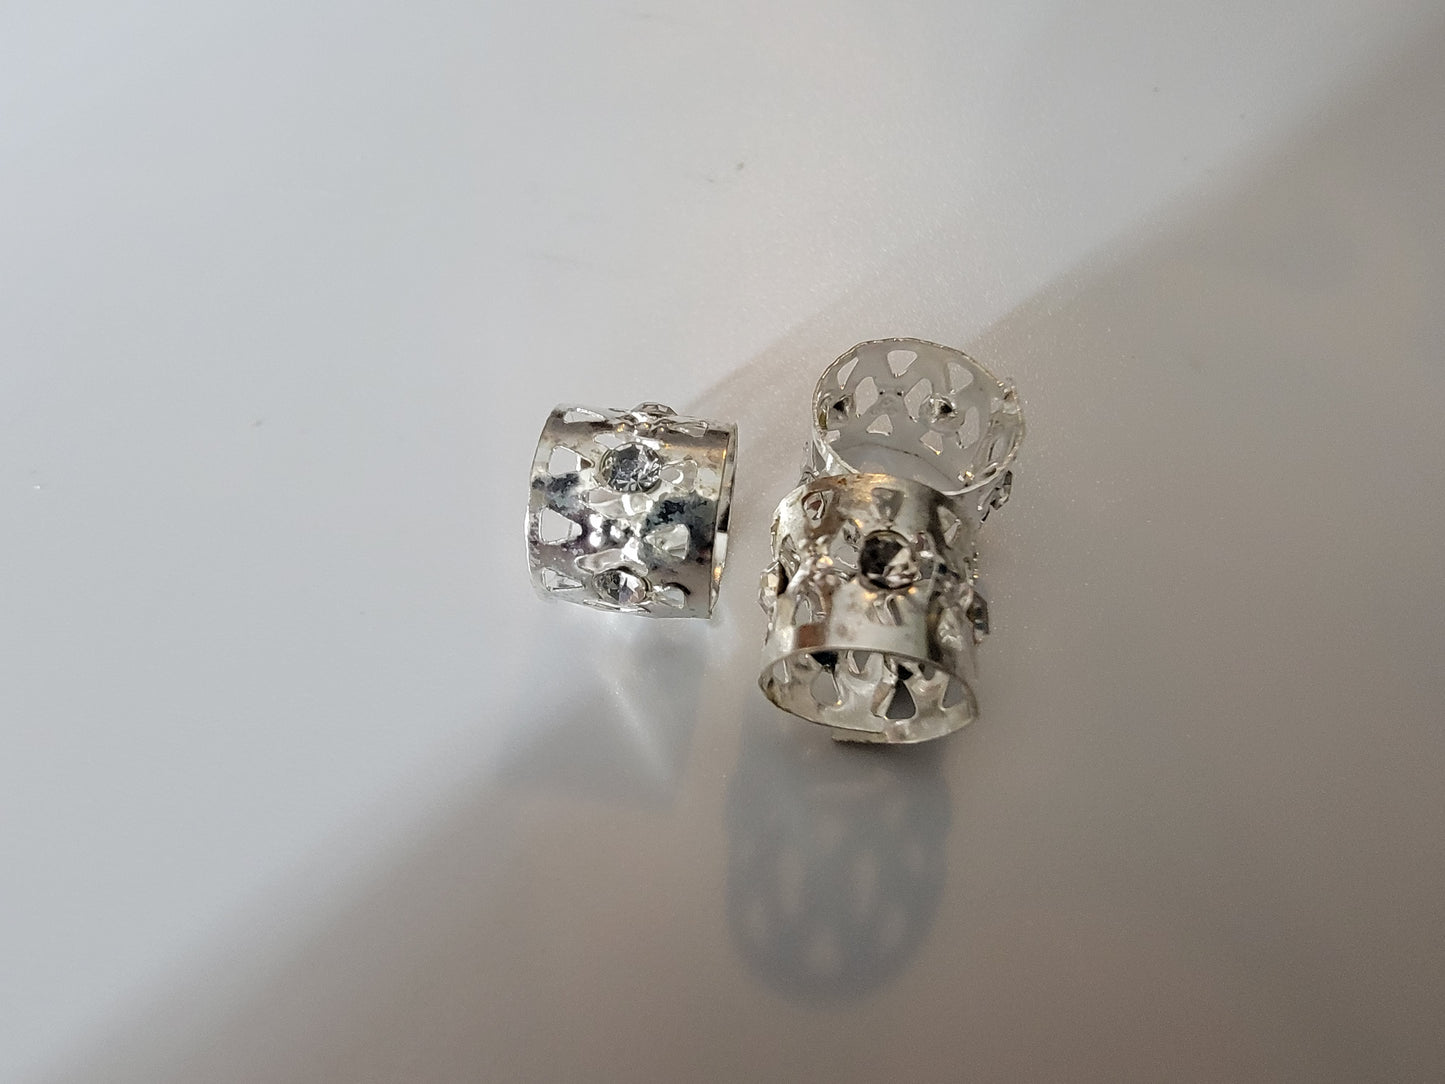 Silver cuffs with diamonds